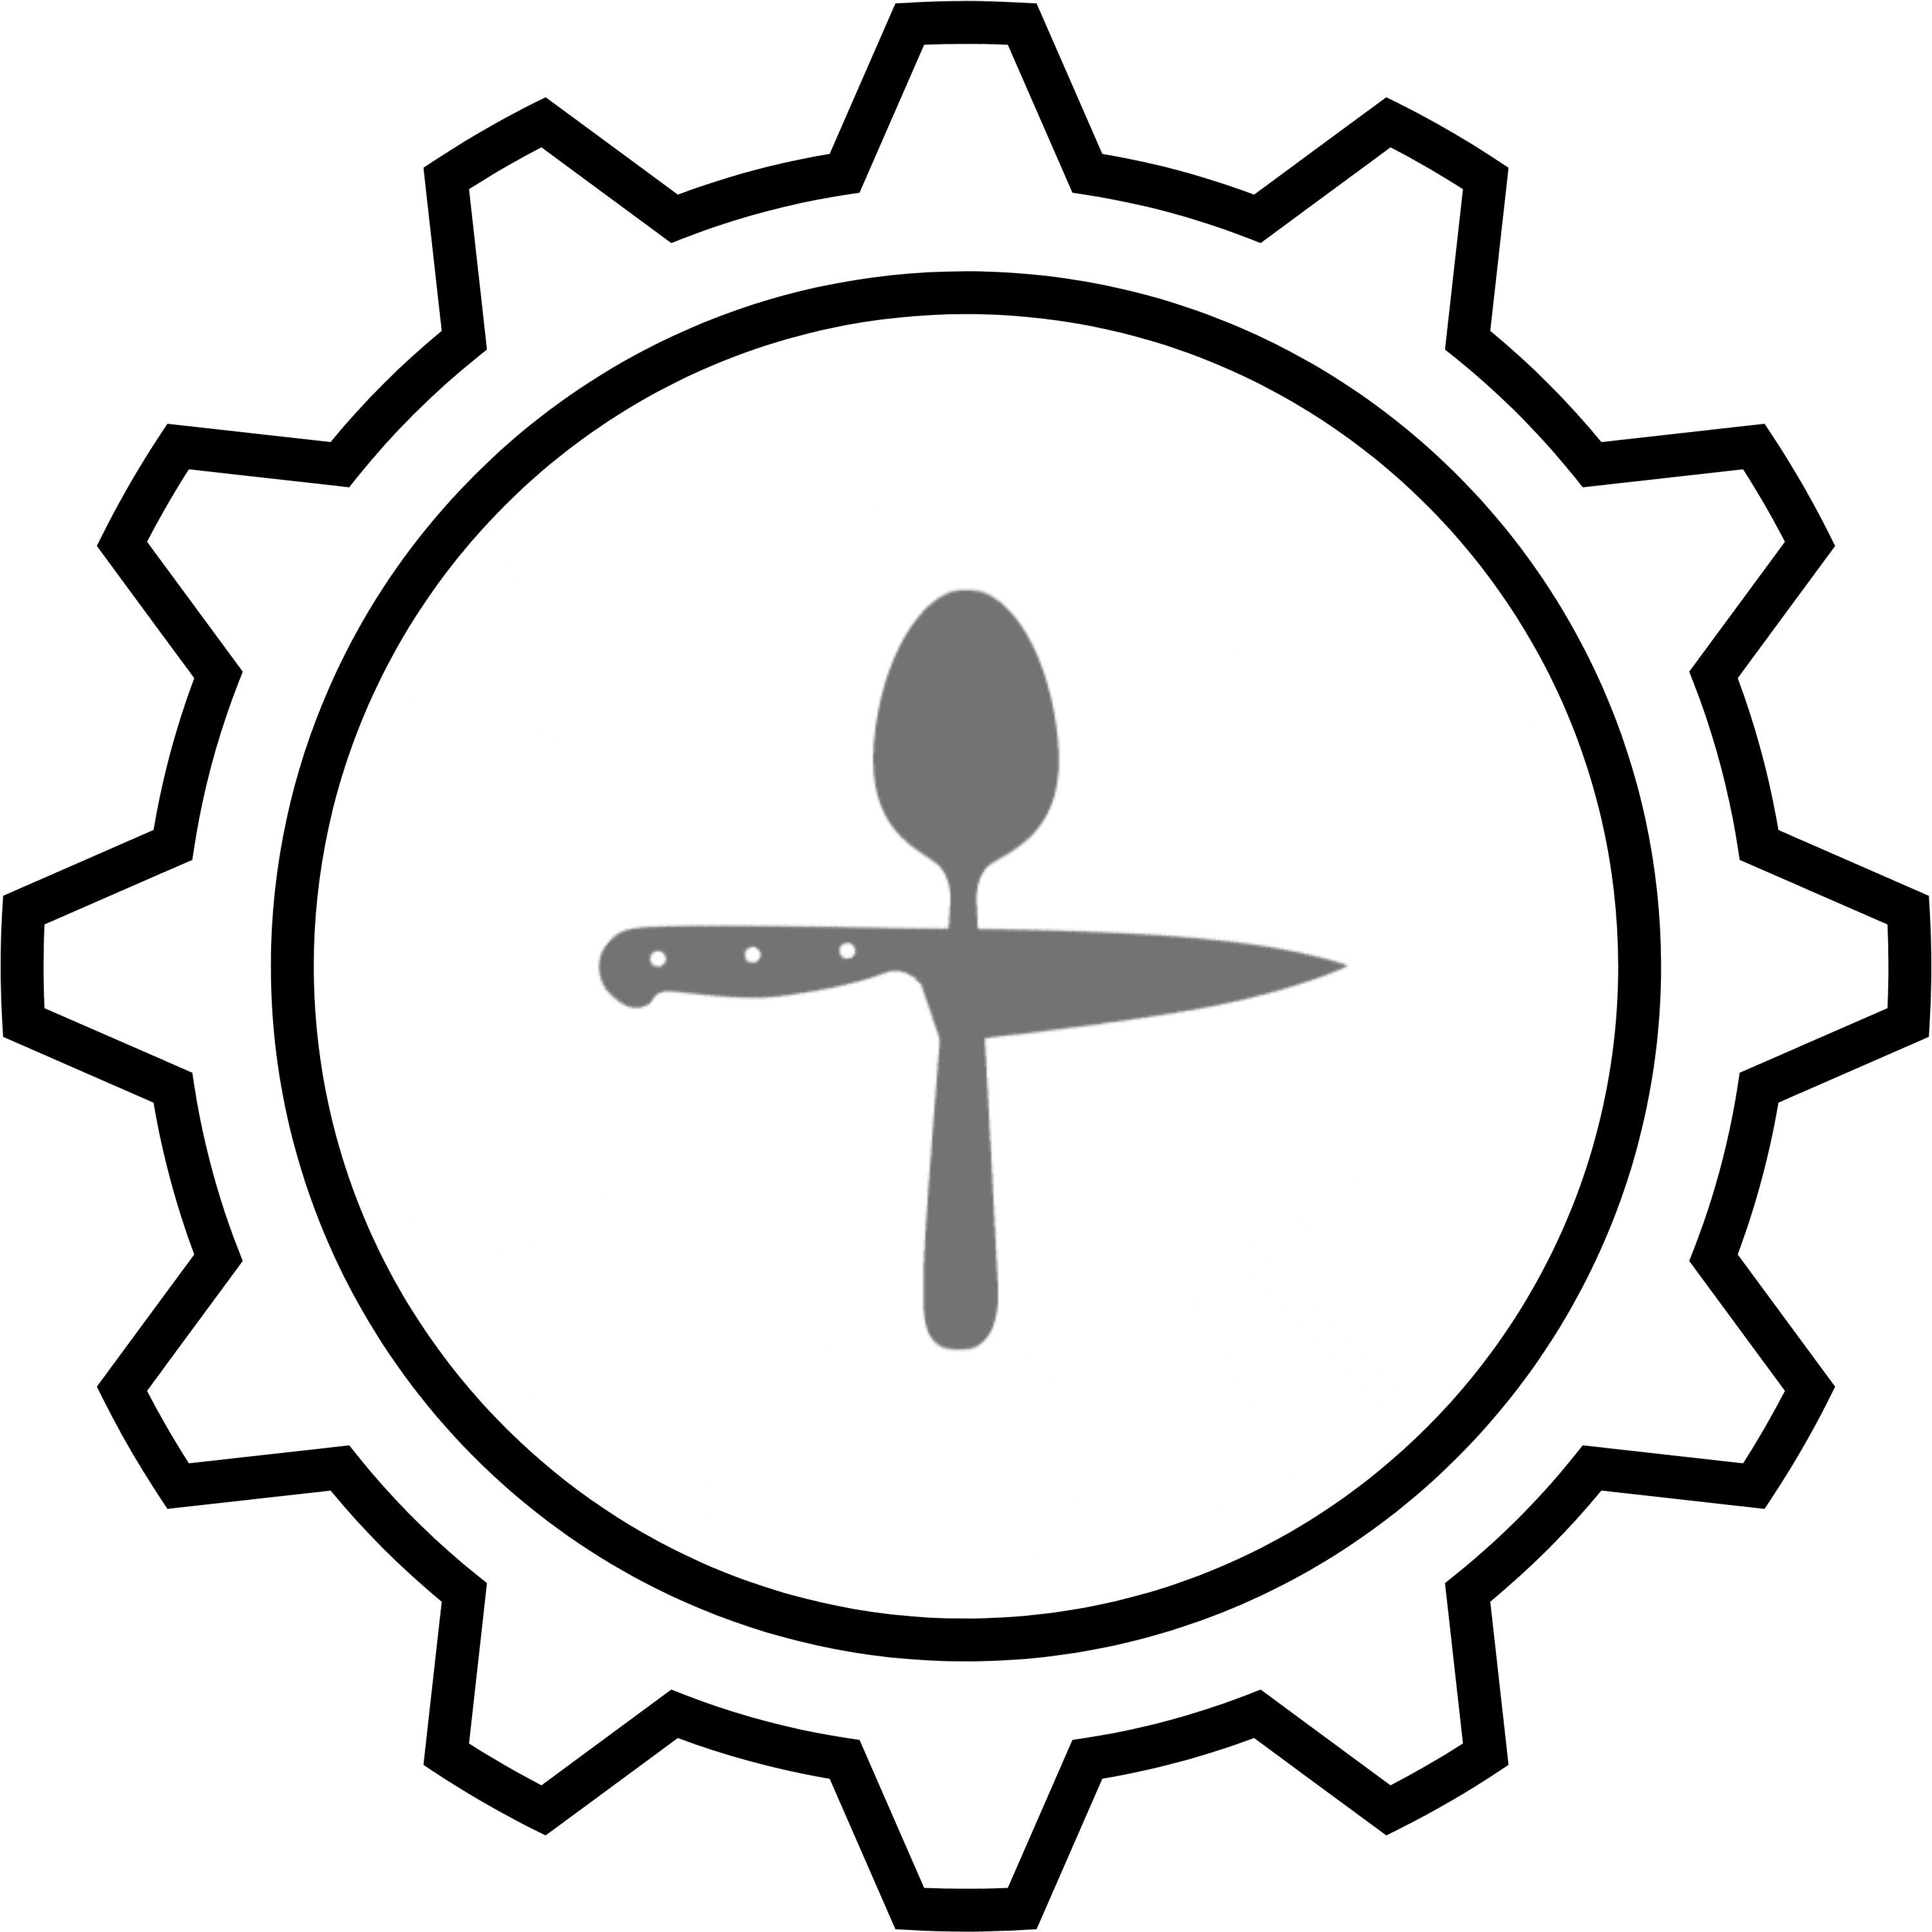 Culinary Mechanic